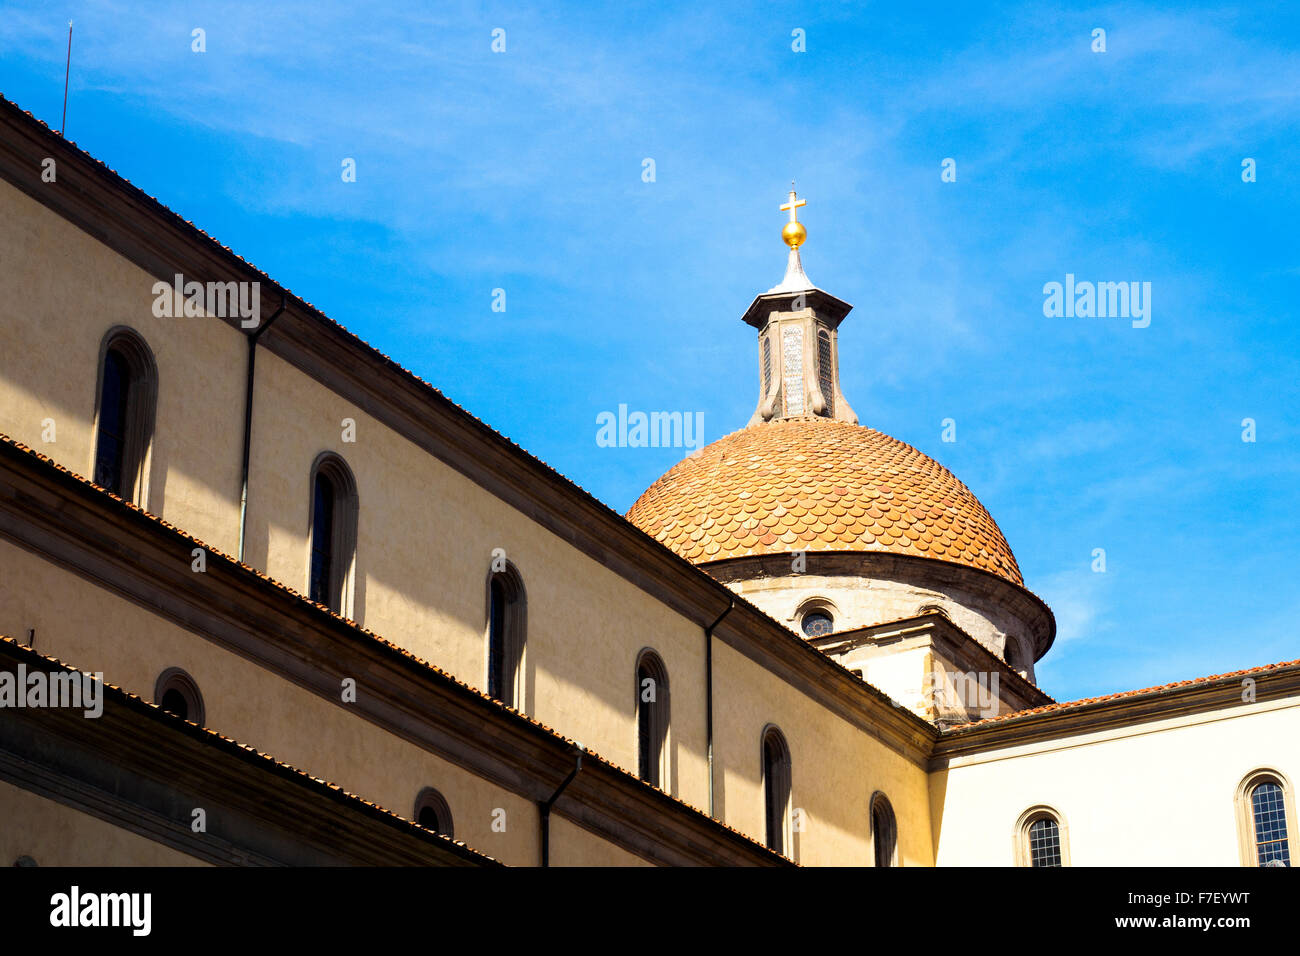 Dome of the Church of Santo Spirito - Florence, Italy Stock Photo - Alamy